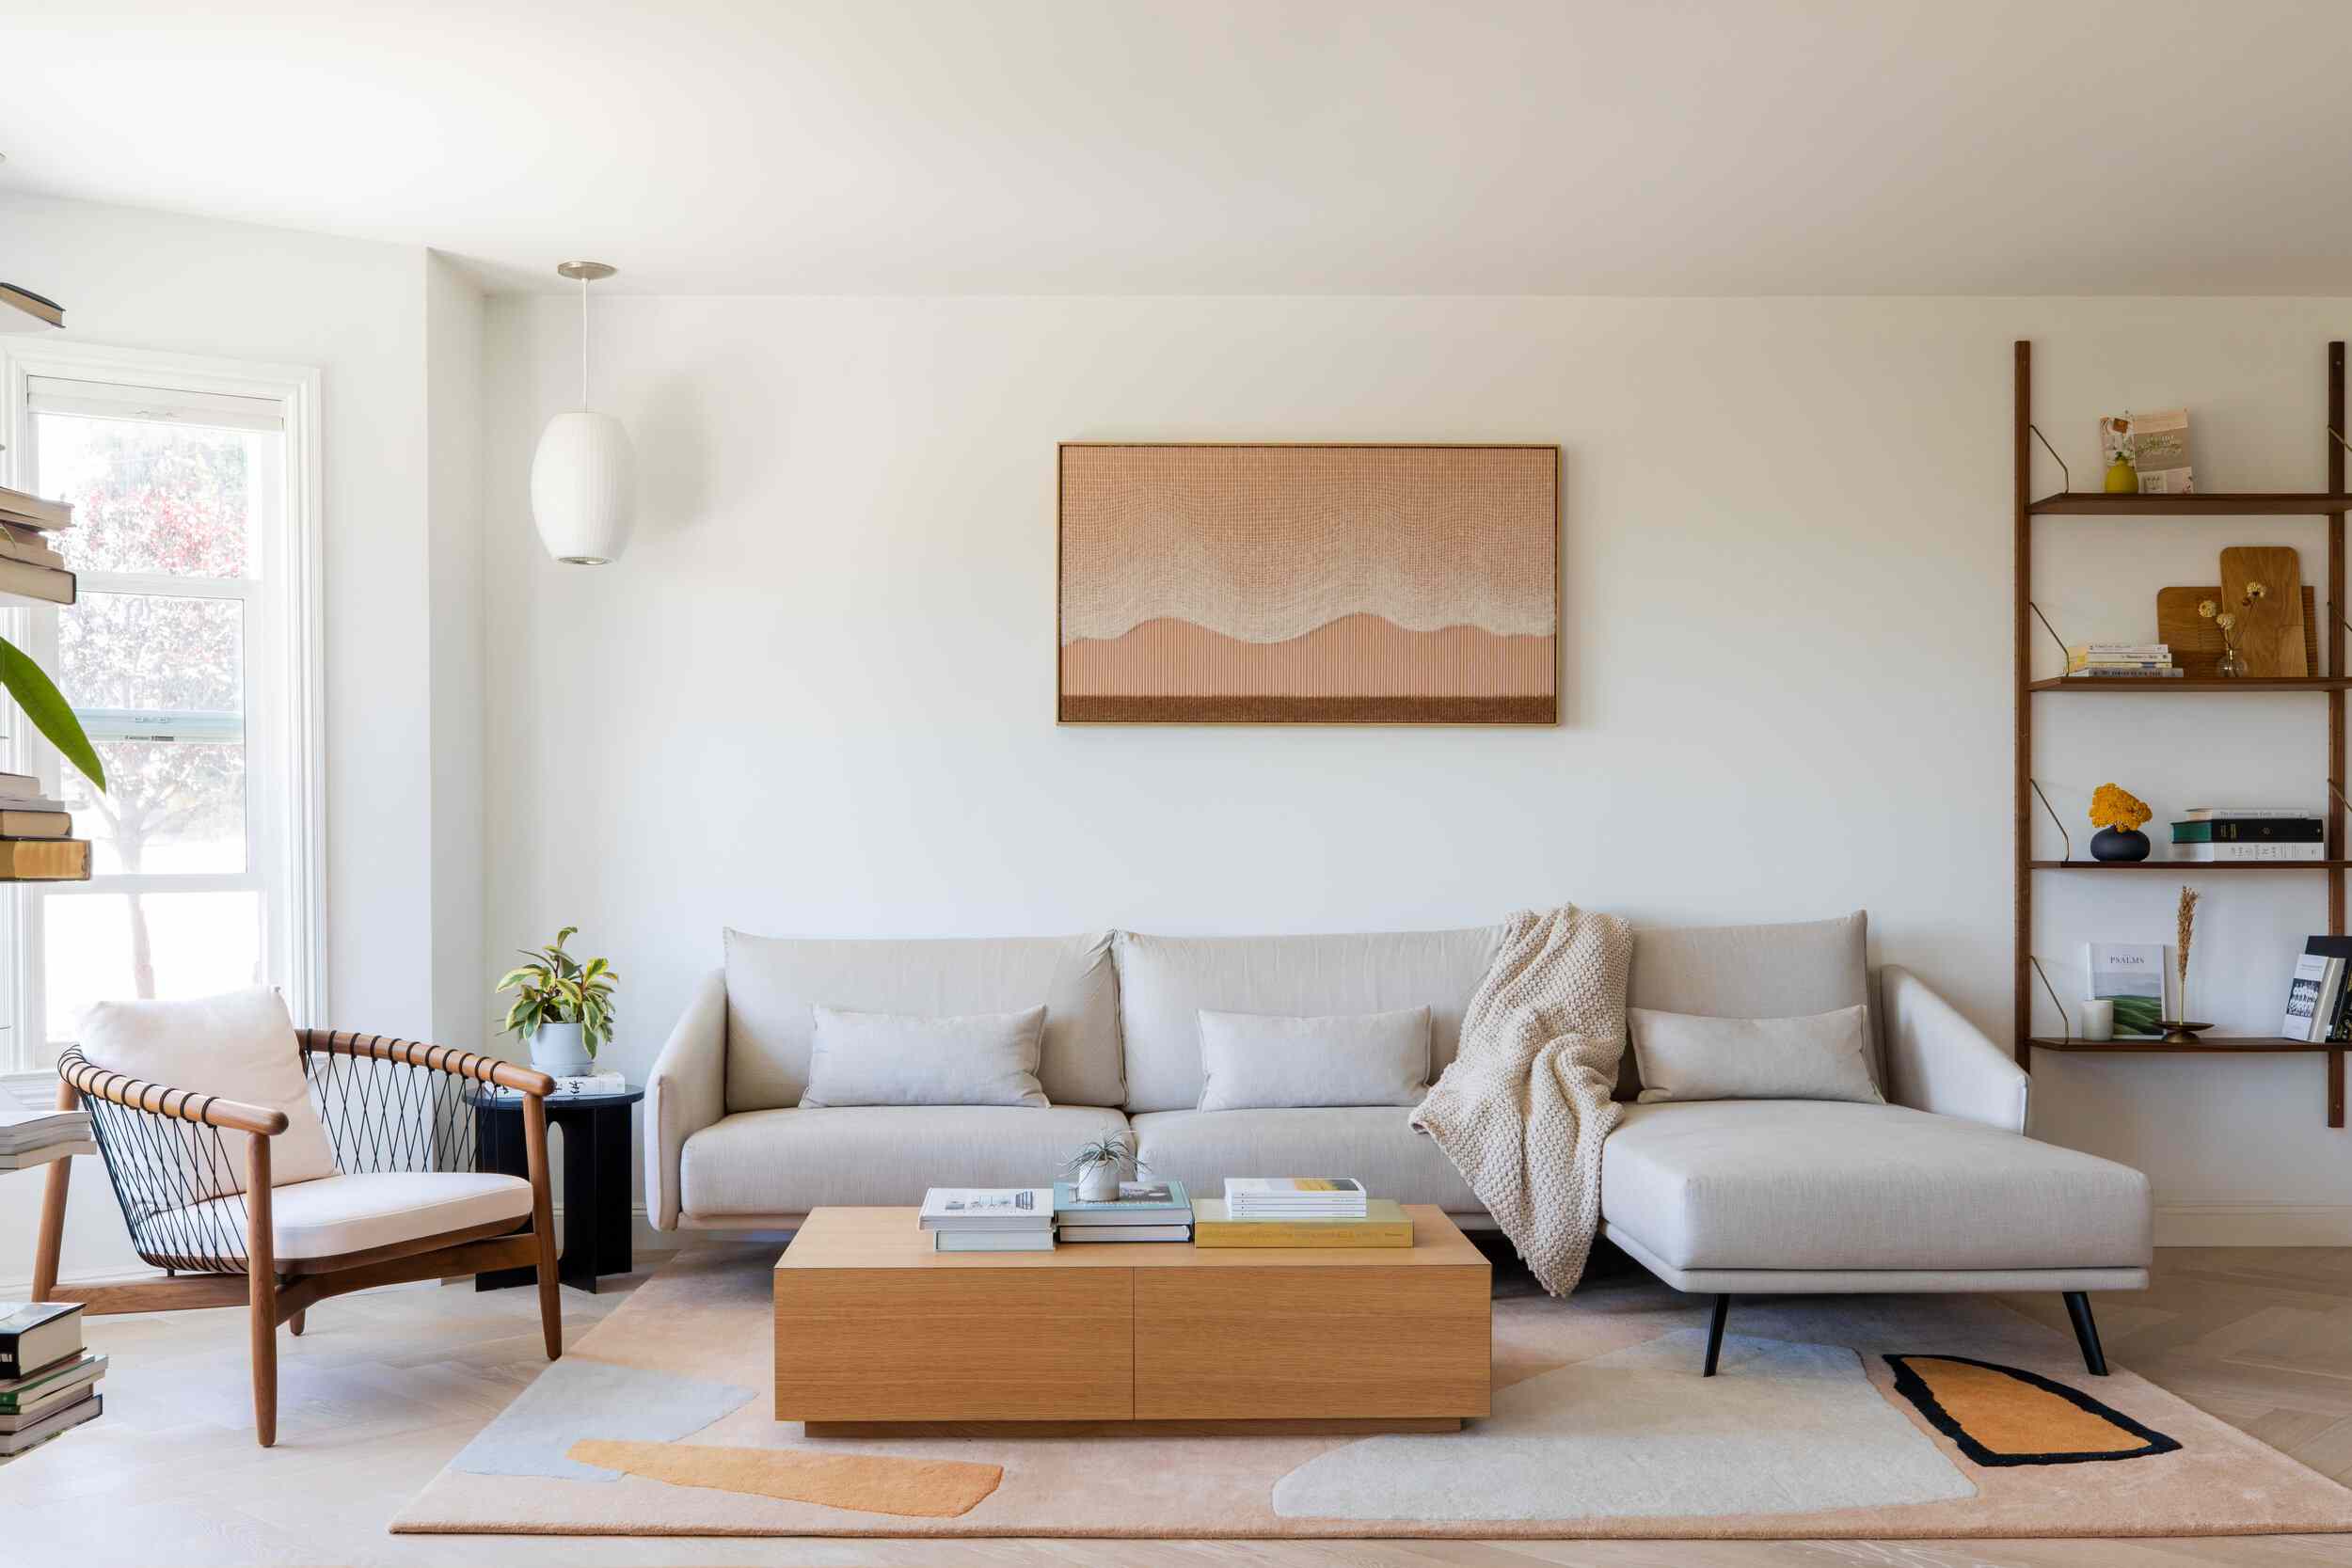 Living room with minimalist decor.